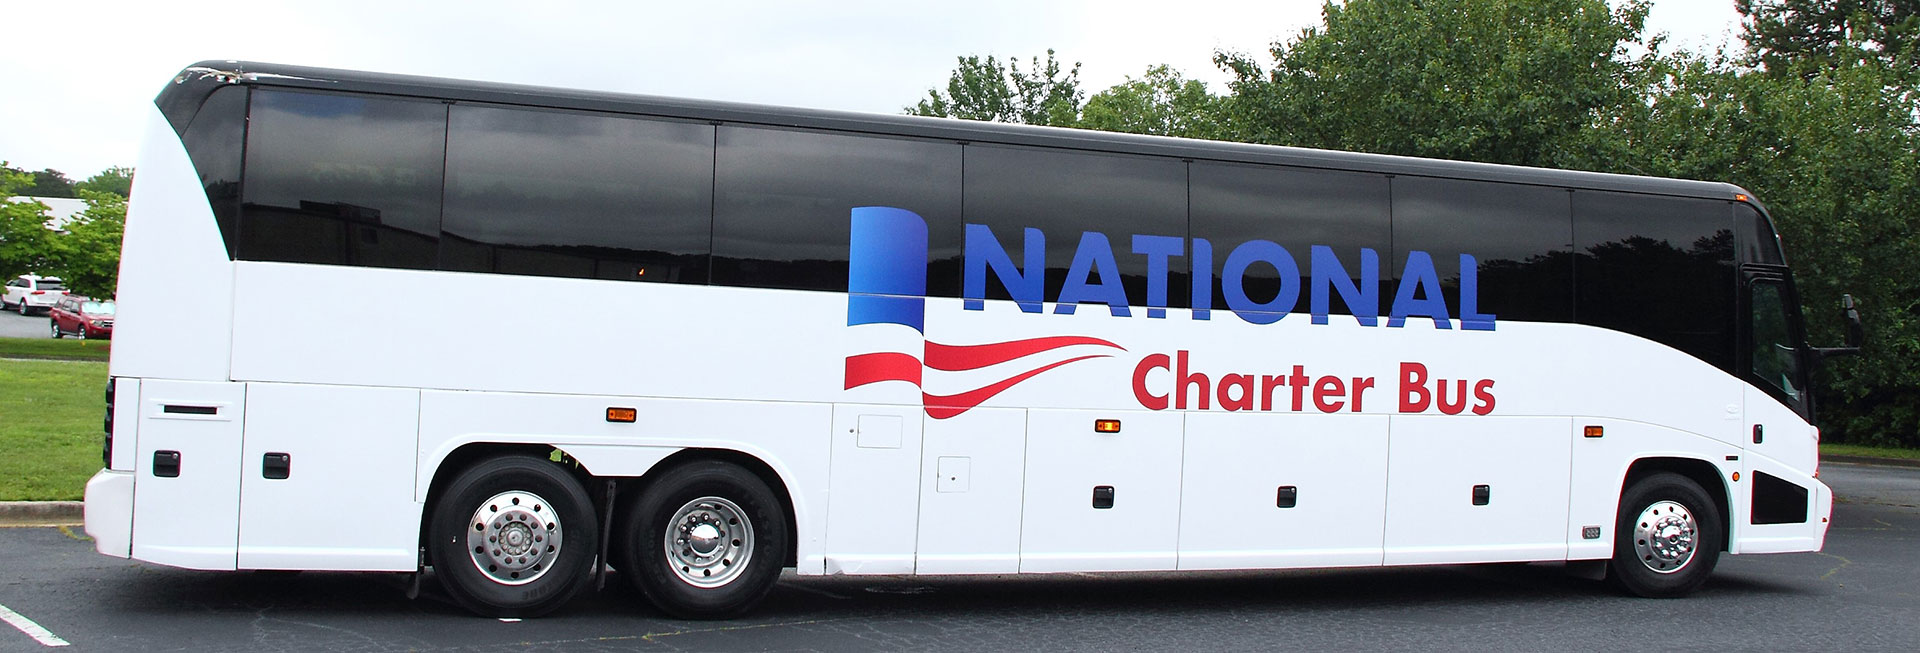 National Charter Bus Philadelphia visitPA